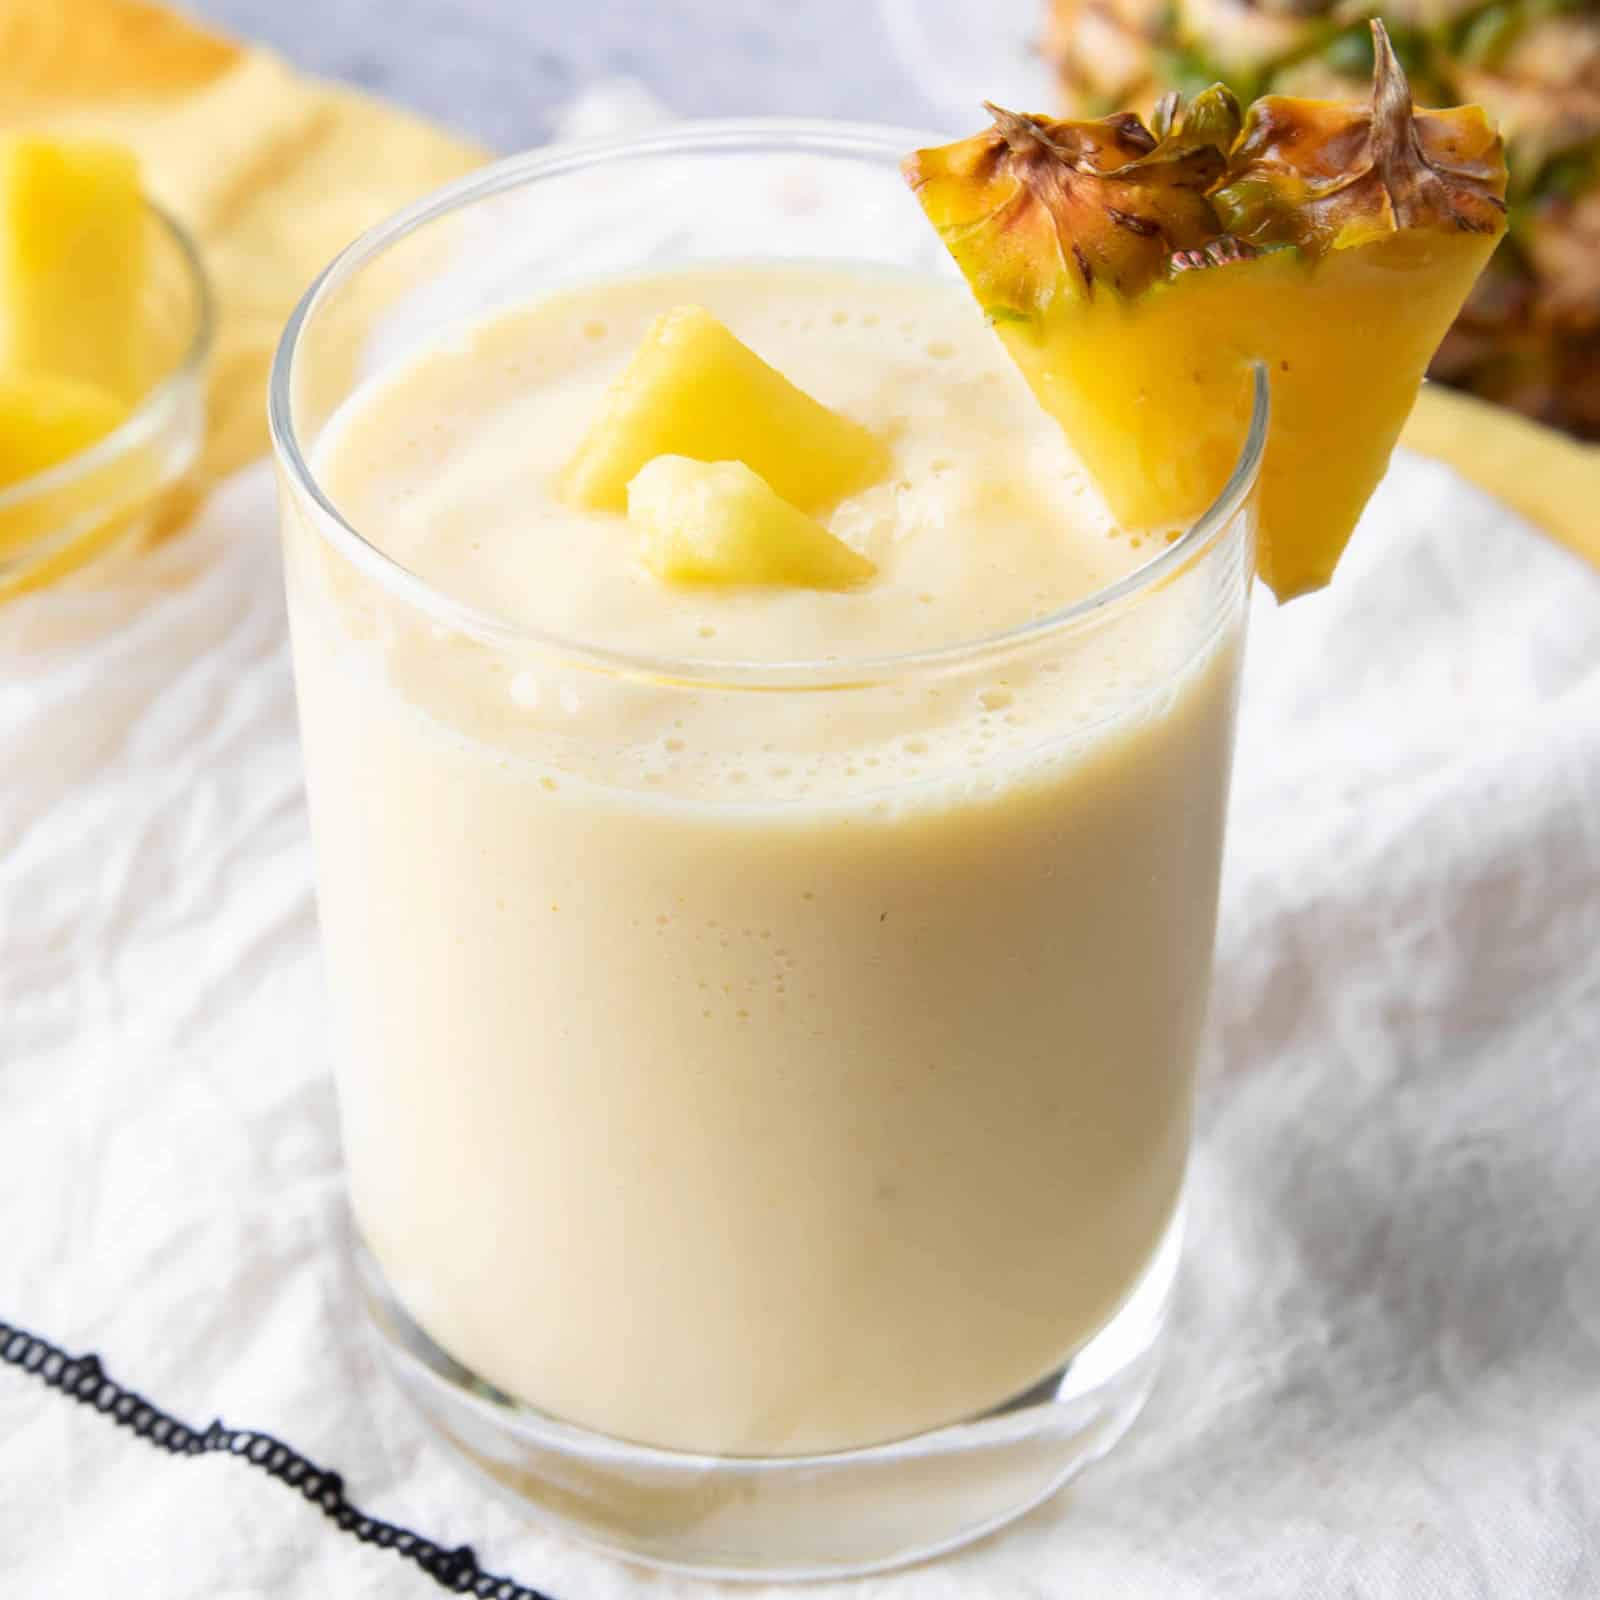 Pineapple Smoothie with Milk & Yogurt